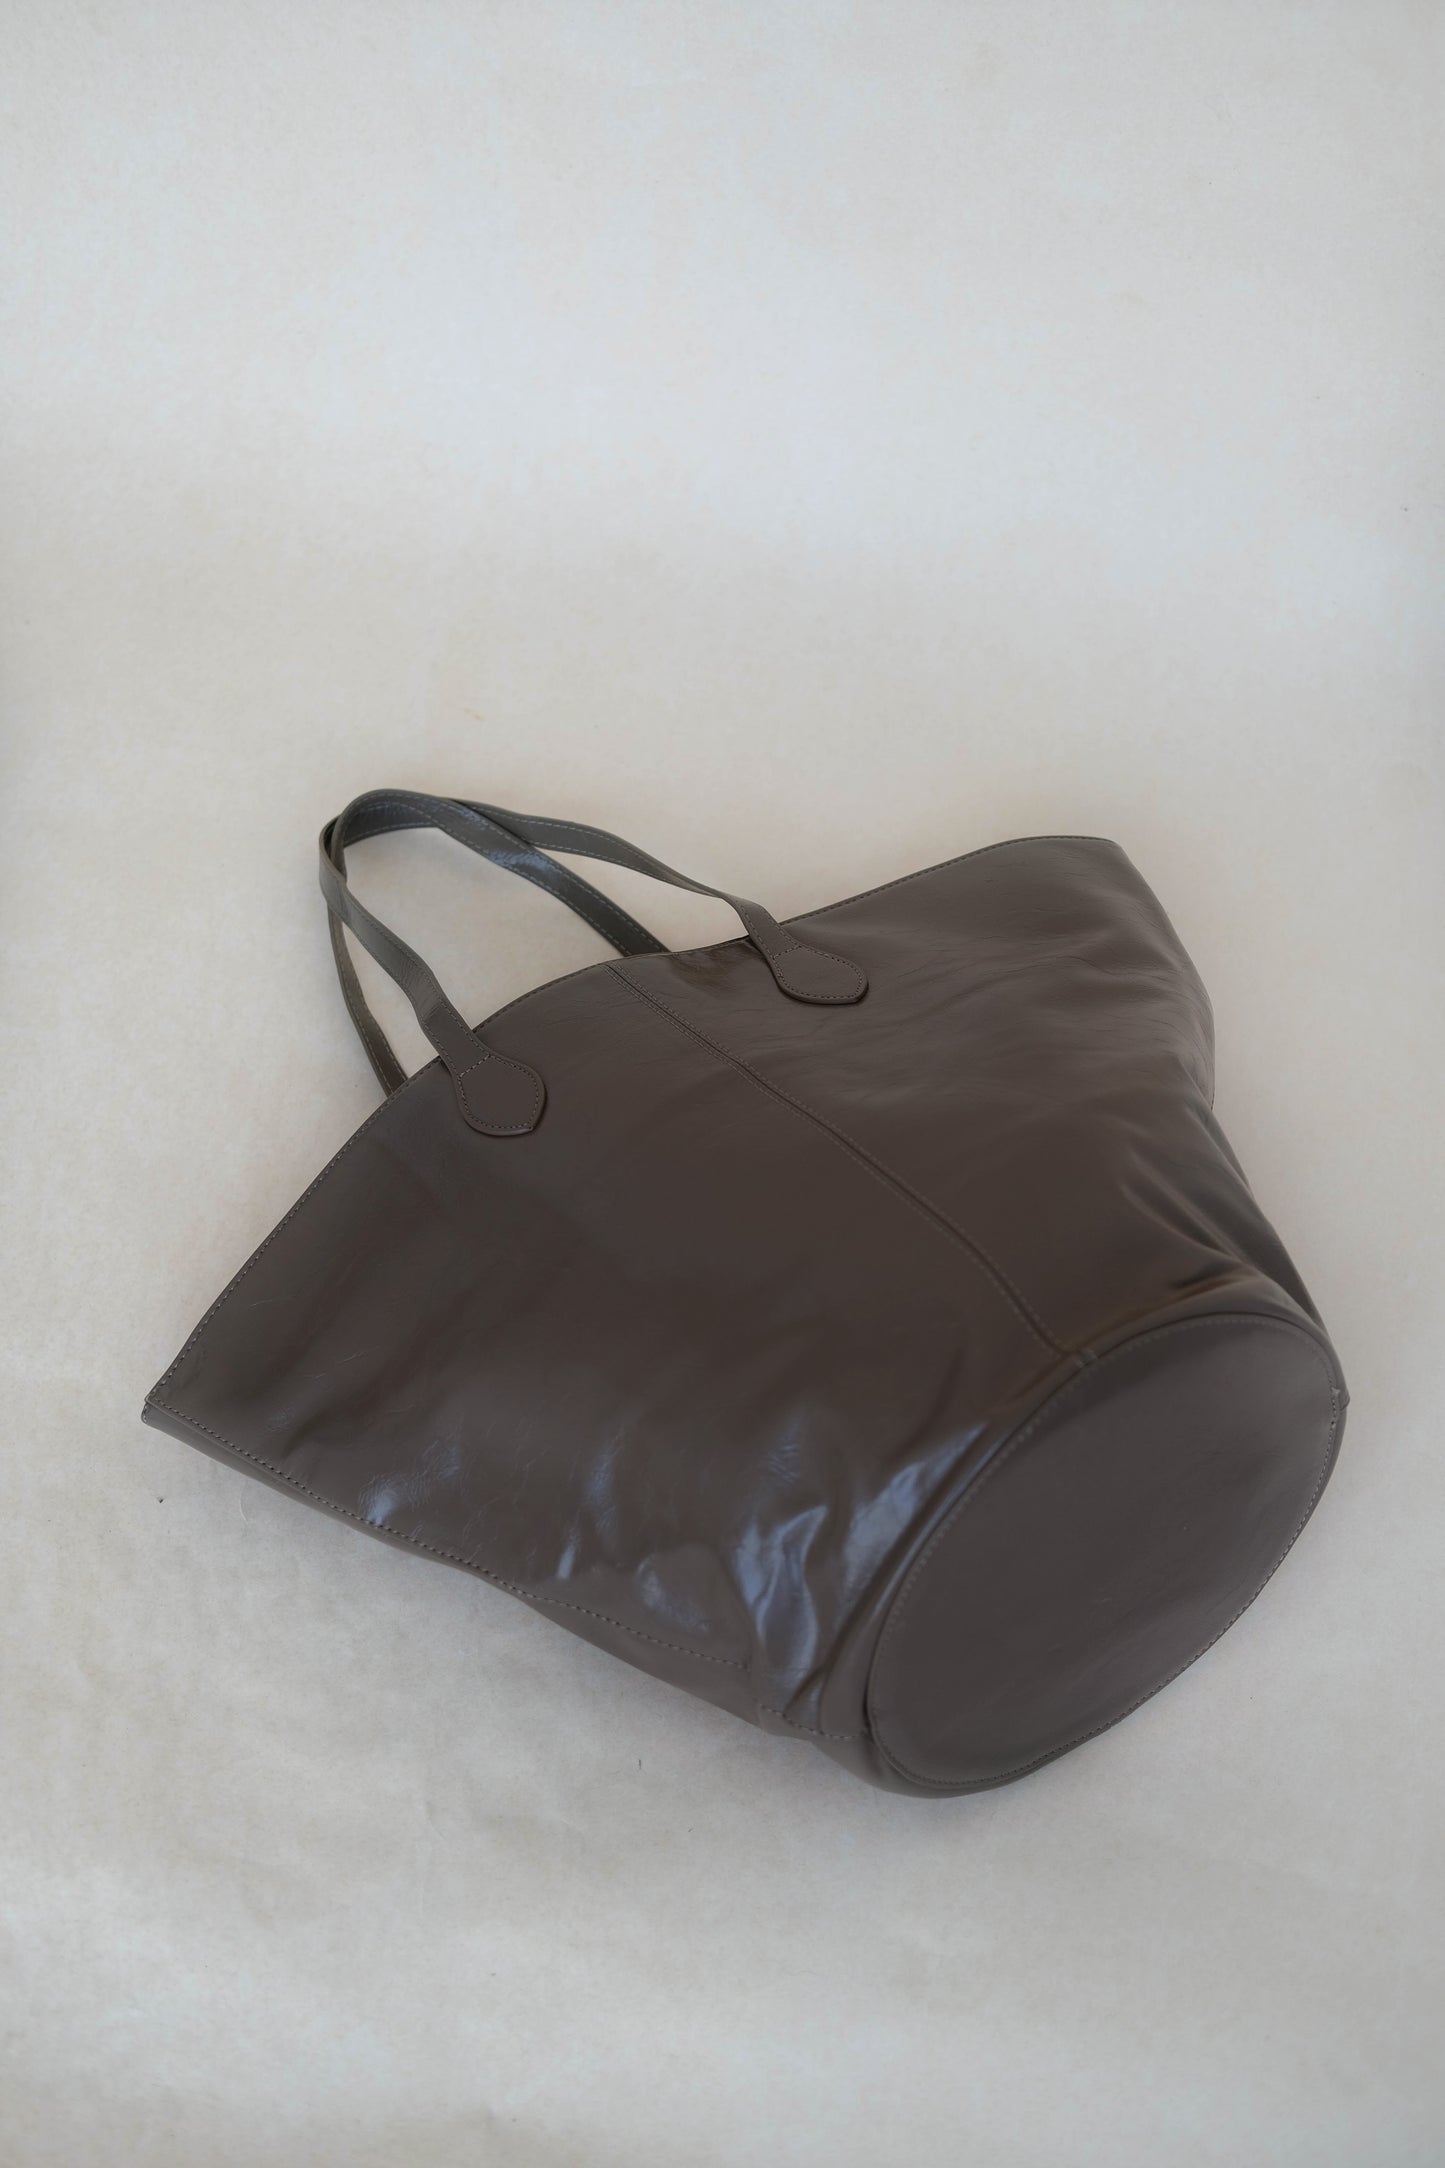 Bucket large capacity shoulder bag in mud color